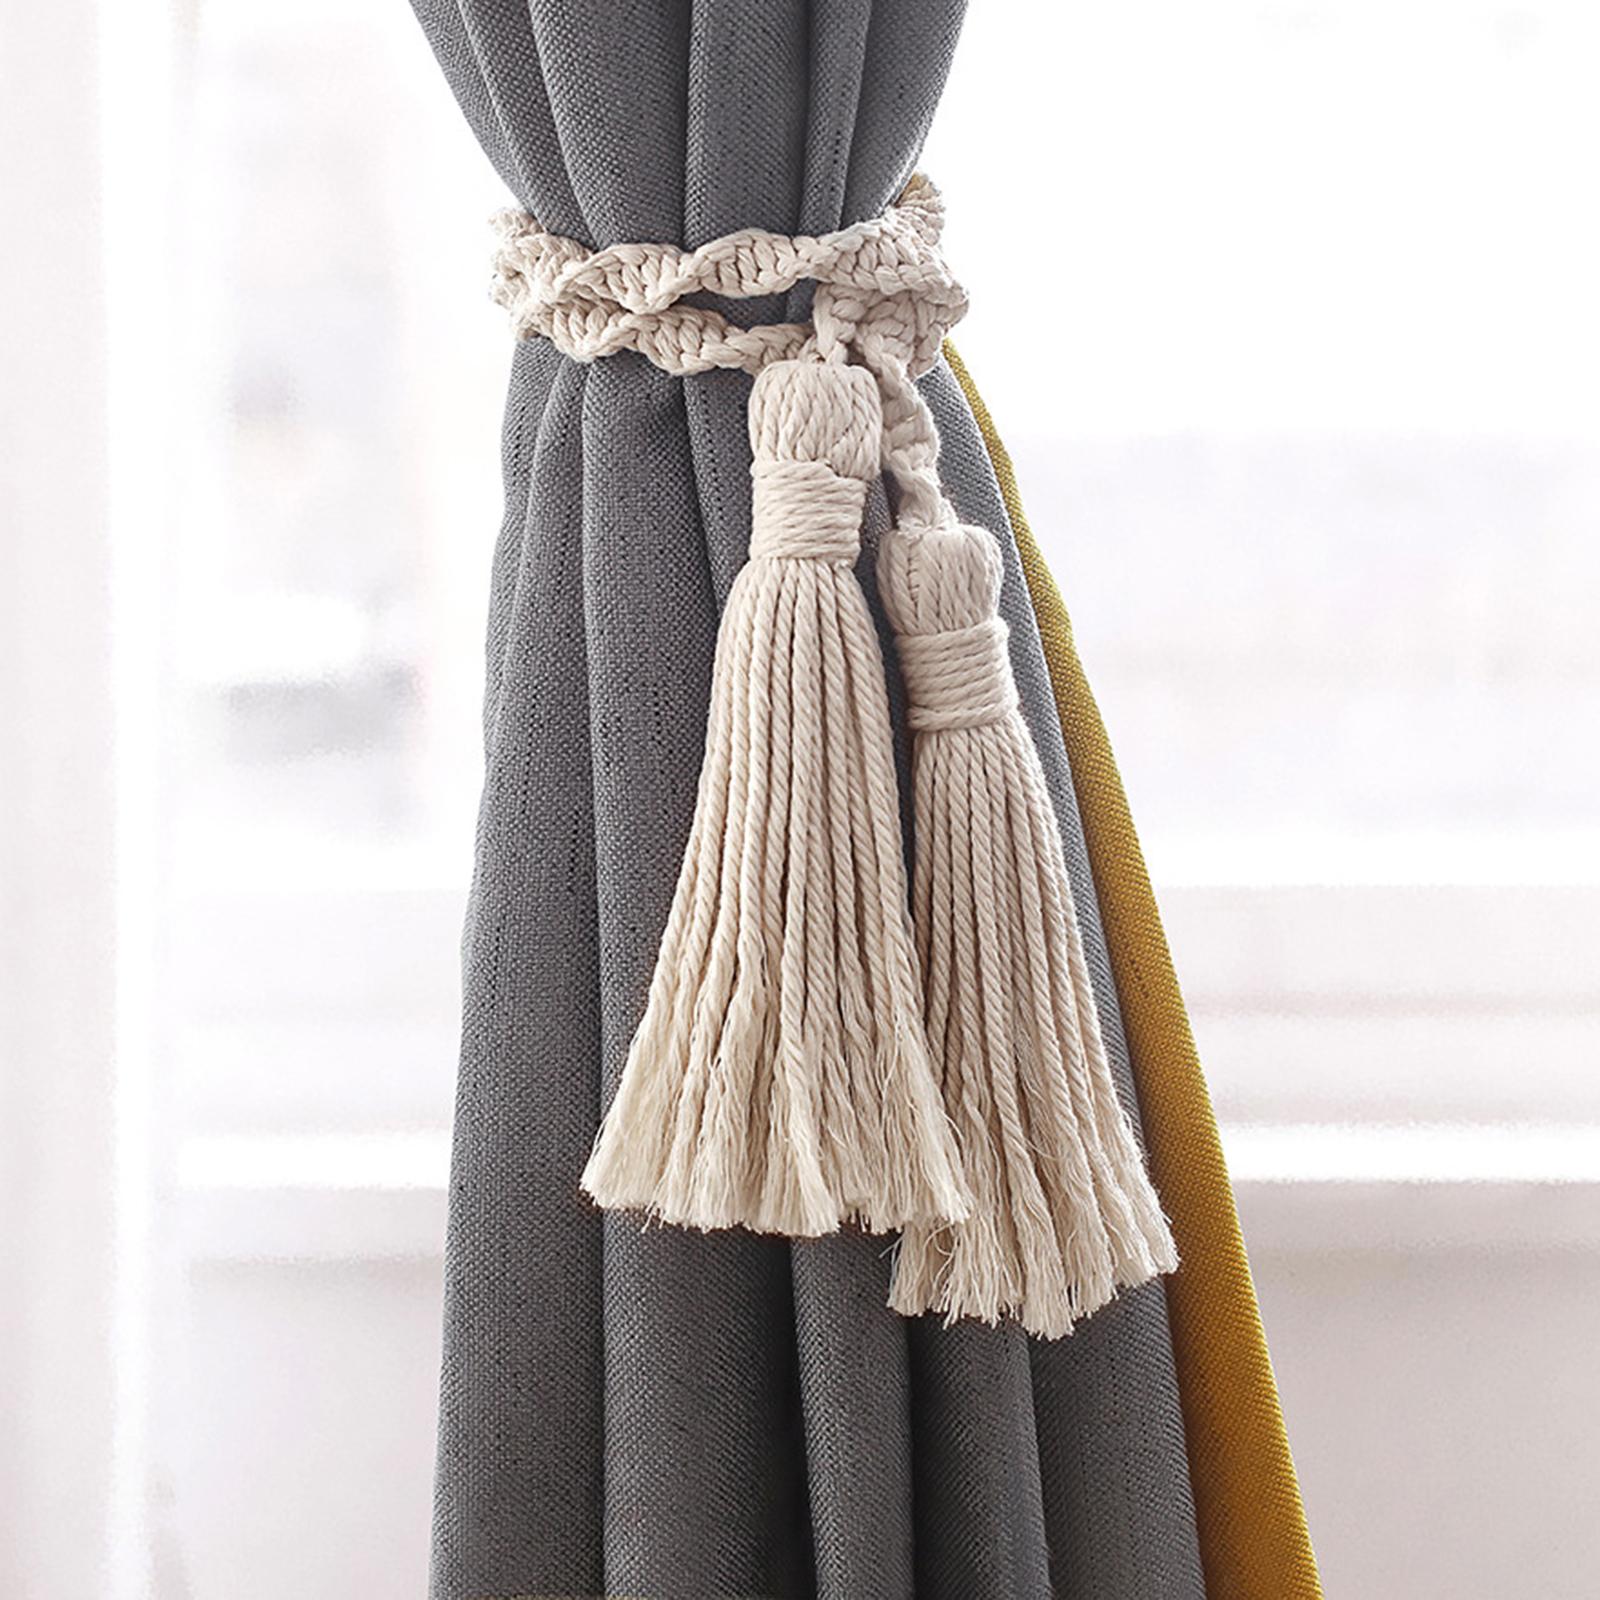 Curtain Tiebacks Home Office Decorative Tie Backs Holders Decorative Drapery